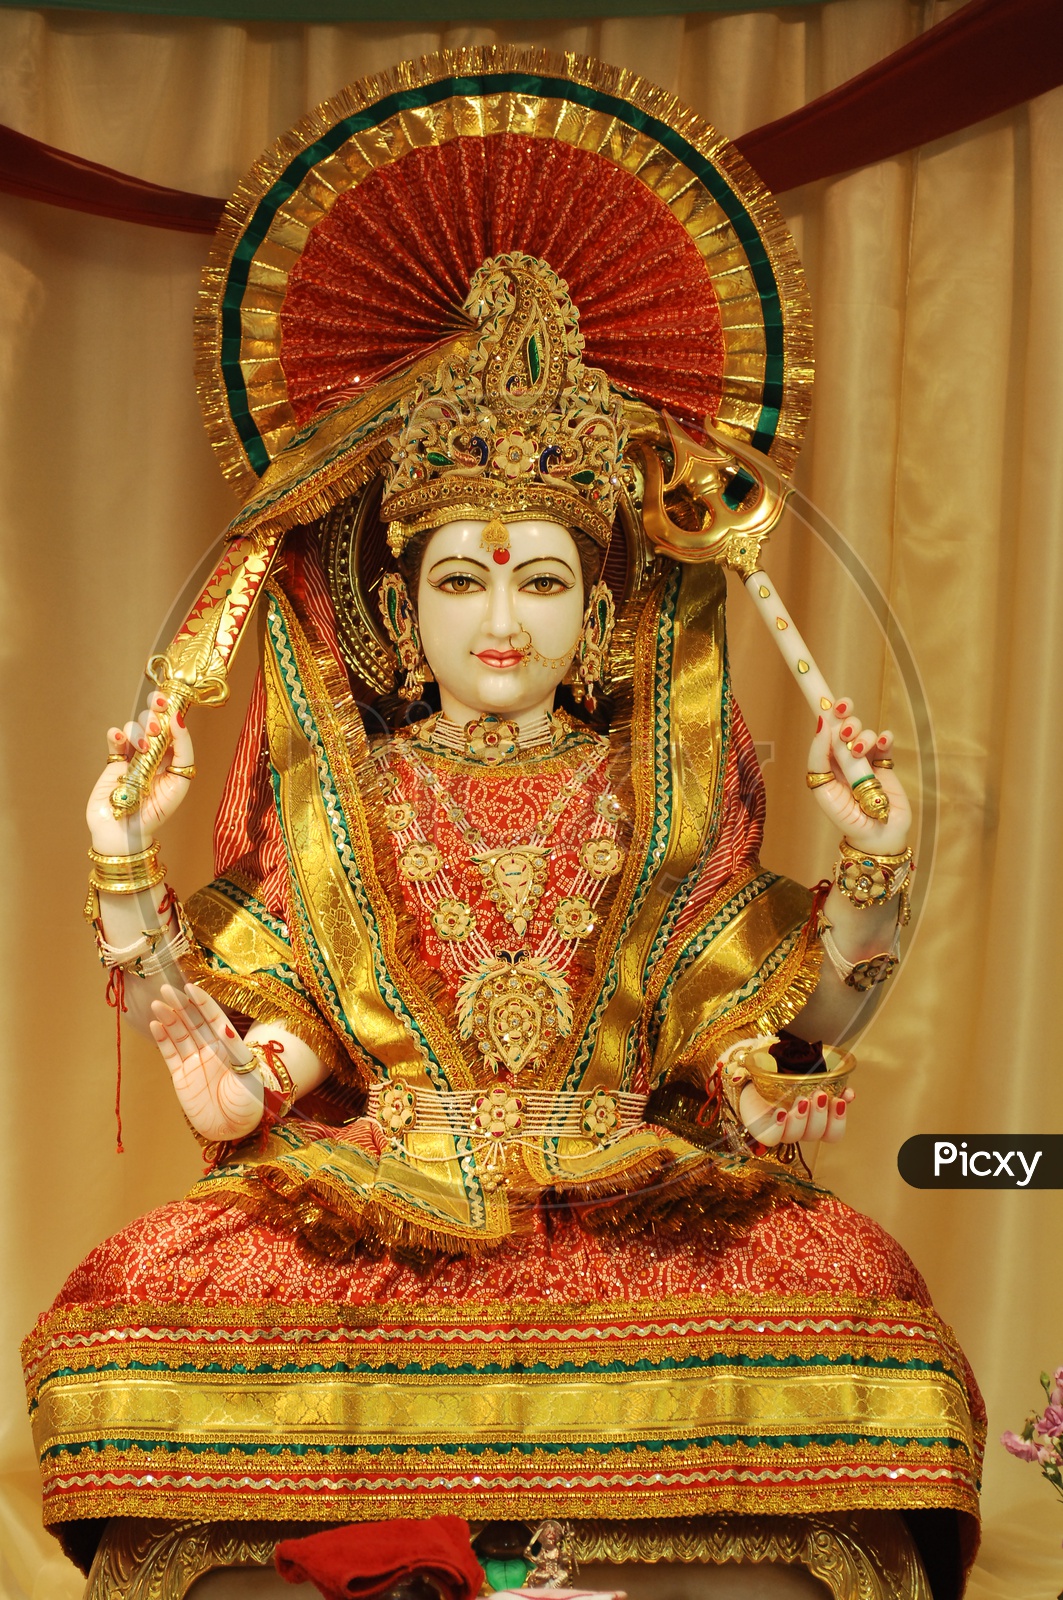 A Decorated Hindu Goddess statue